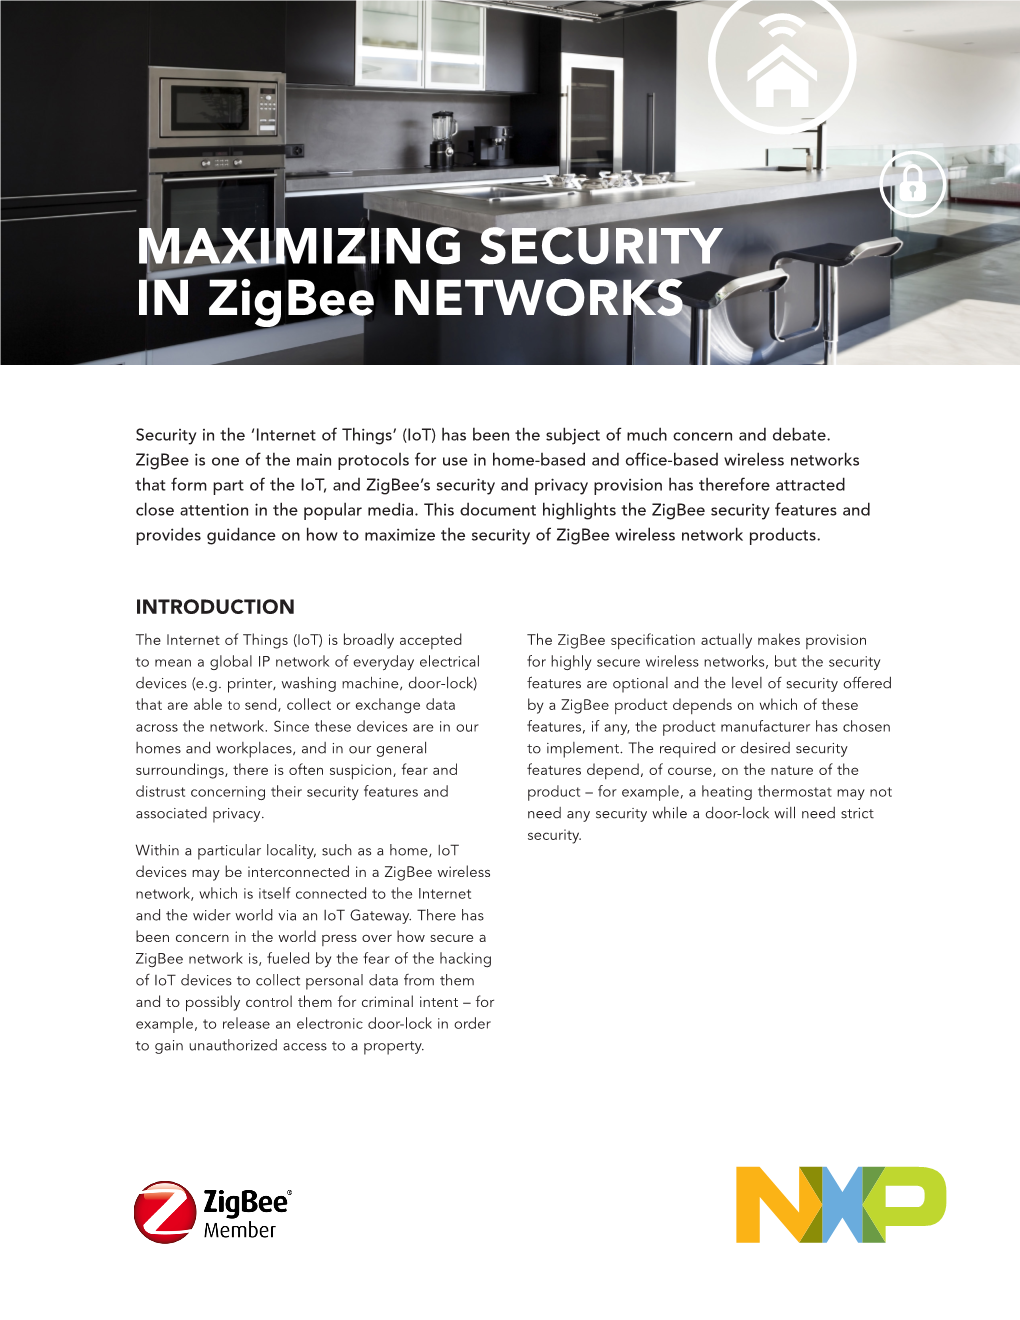 MAXIMIZING SECURITY in Zigbee NETWORKS